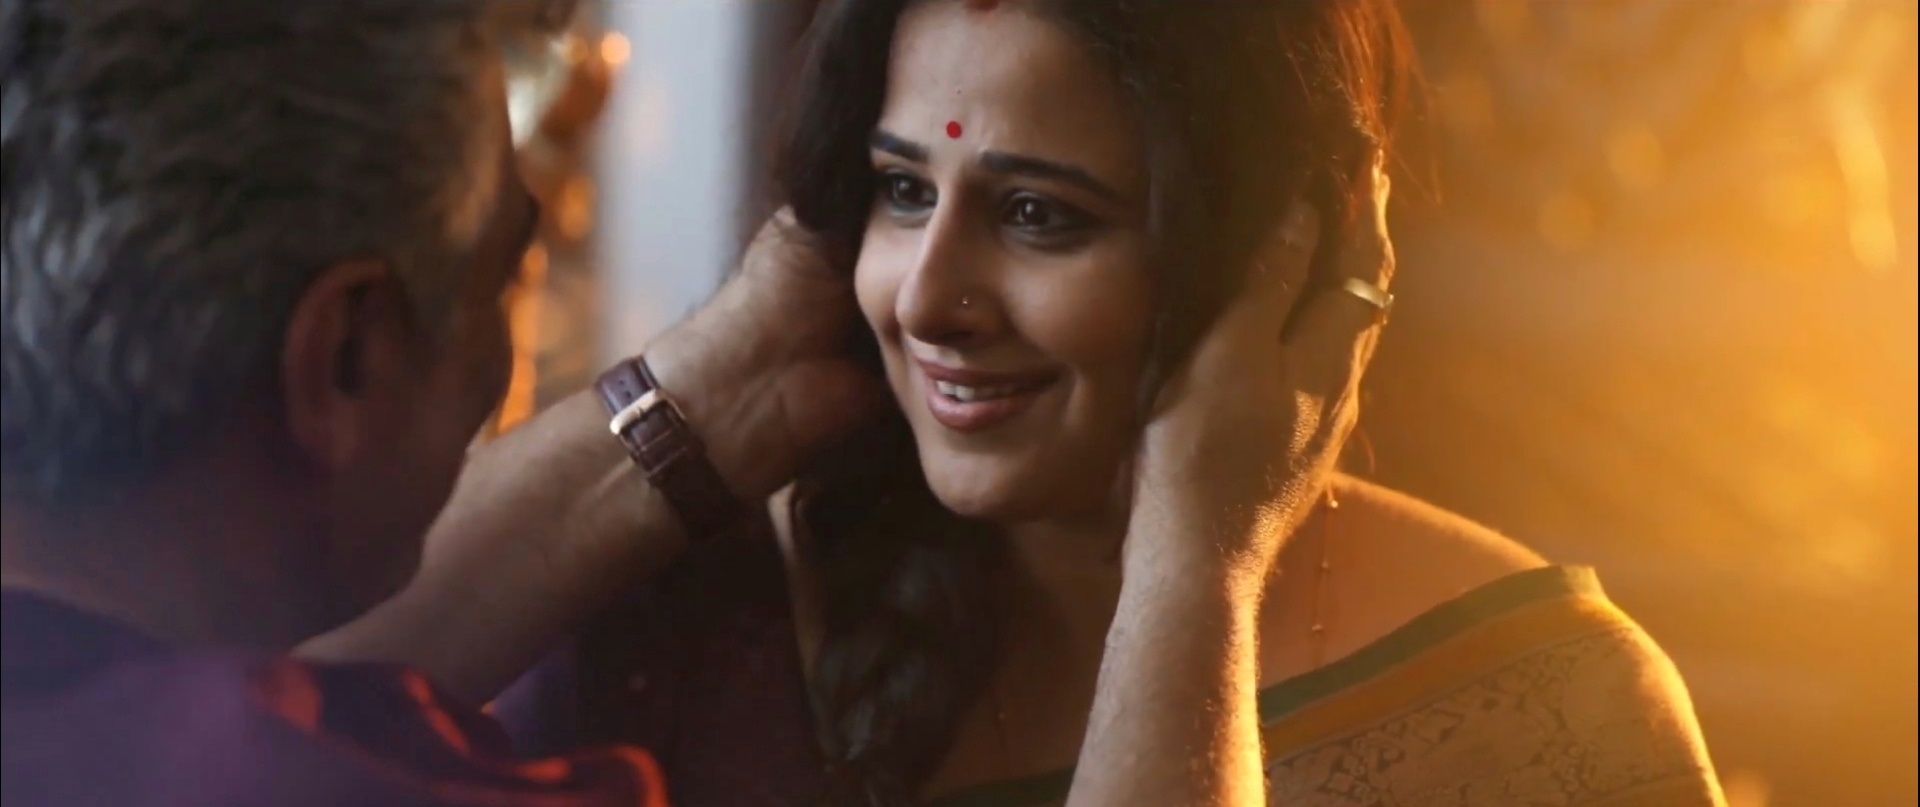 Thala Ajith And Vidhya Balan Romantic Stills From Nerkonda Paarvai Set 2